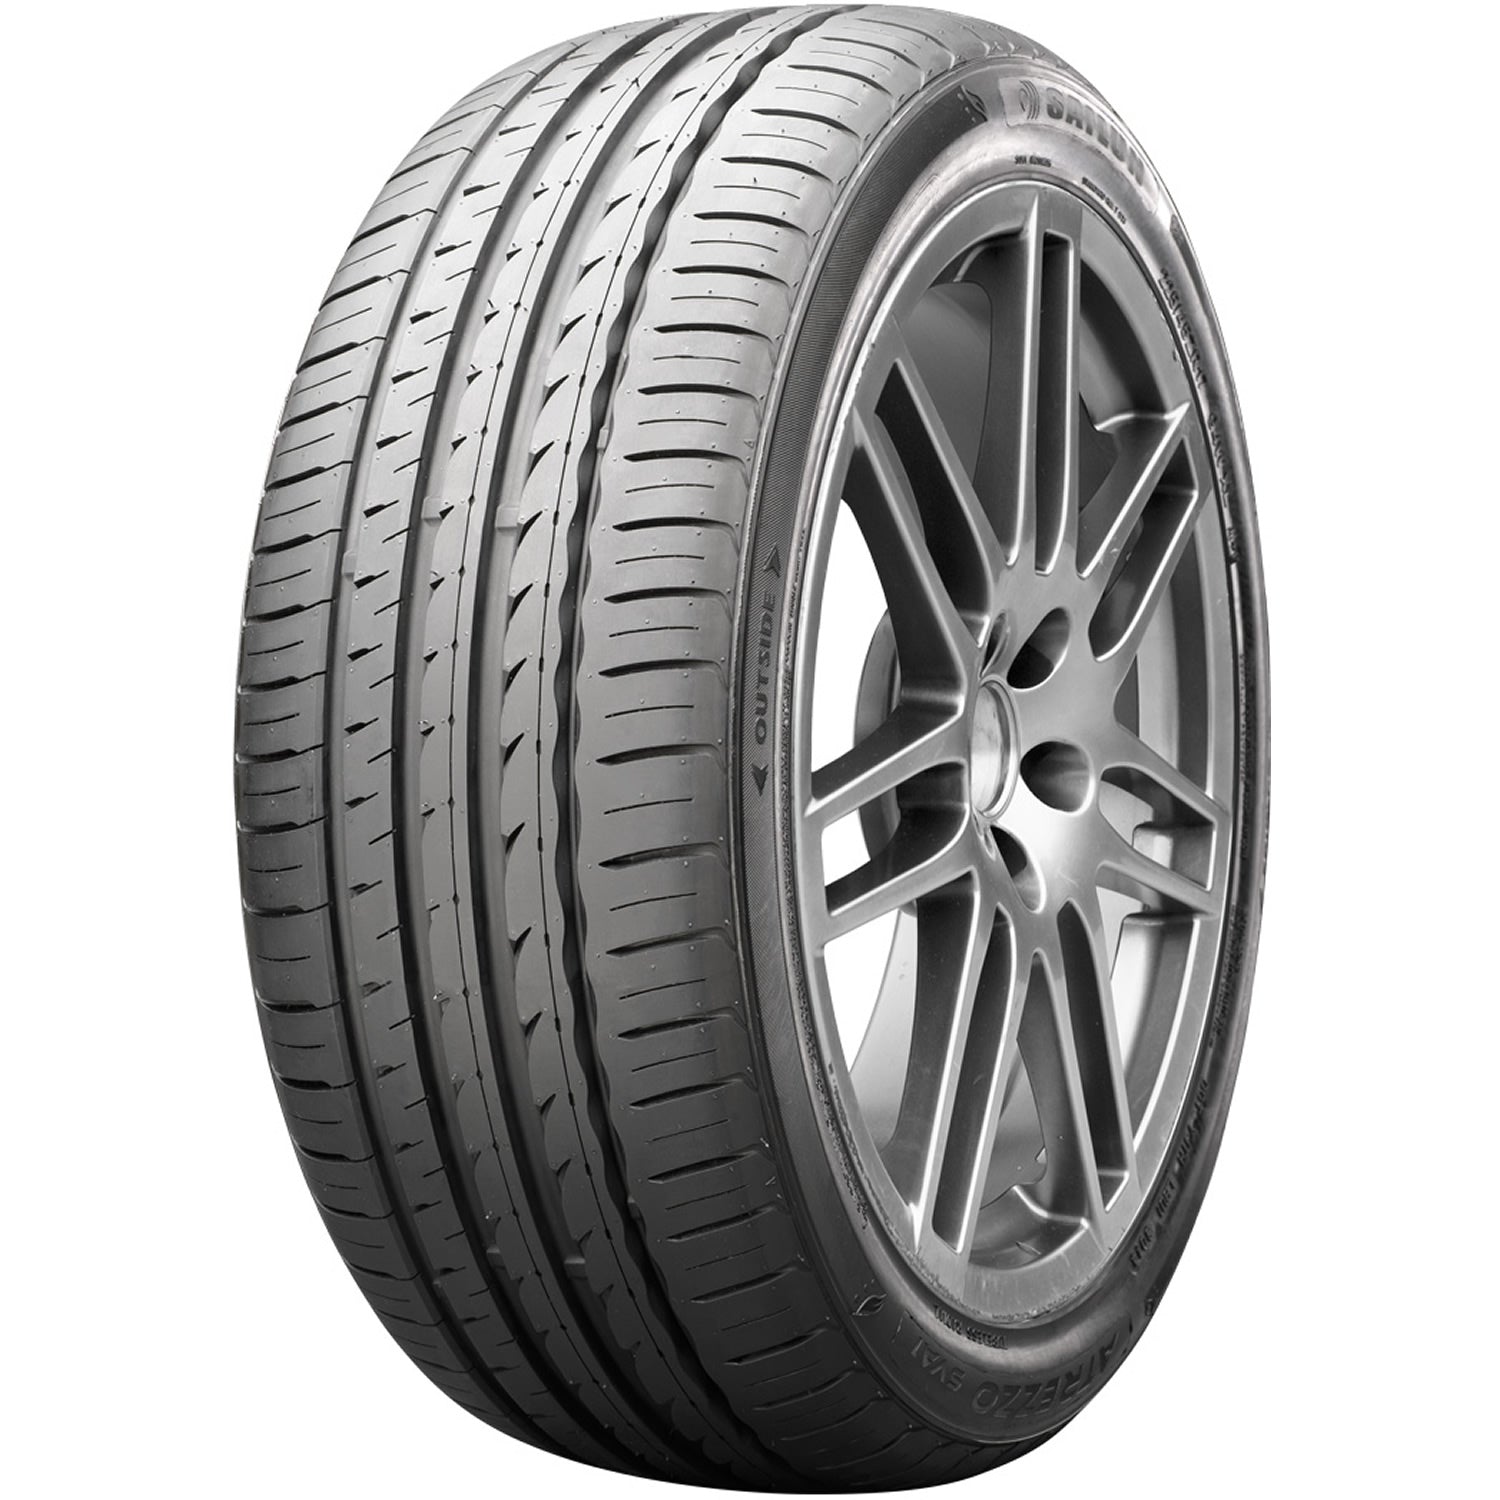 SAILUN ATREZZO SVA1 245/40R17 (24.7X9.8R 17) Tires